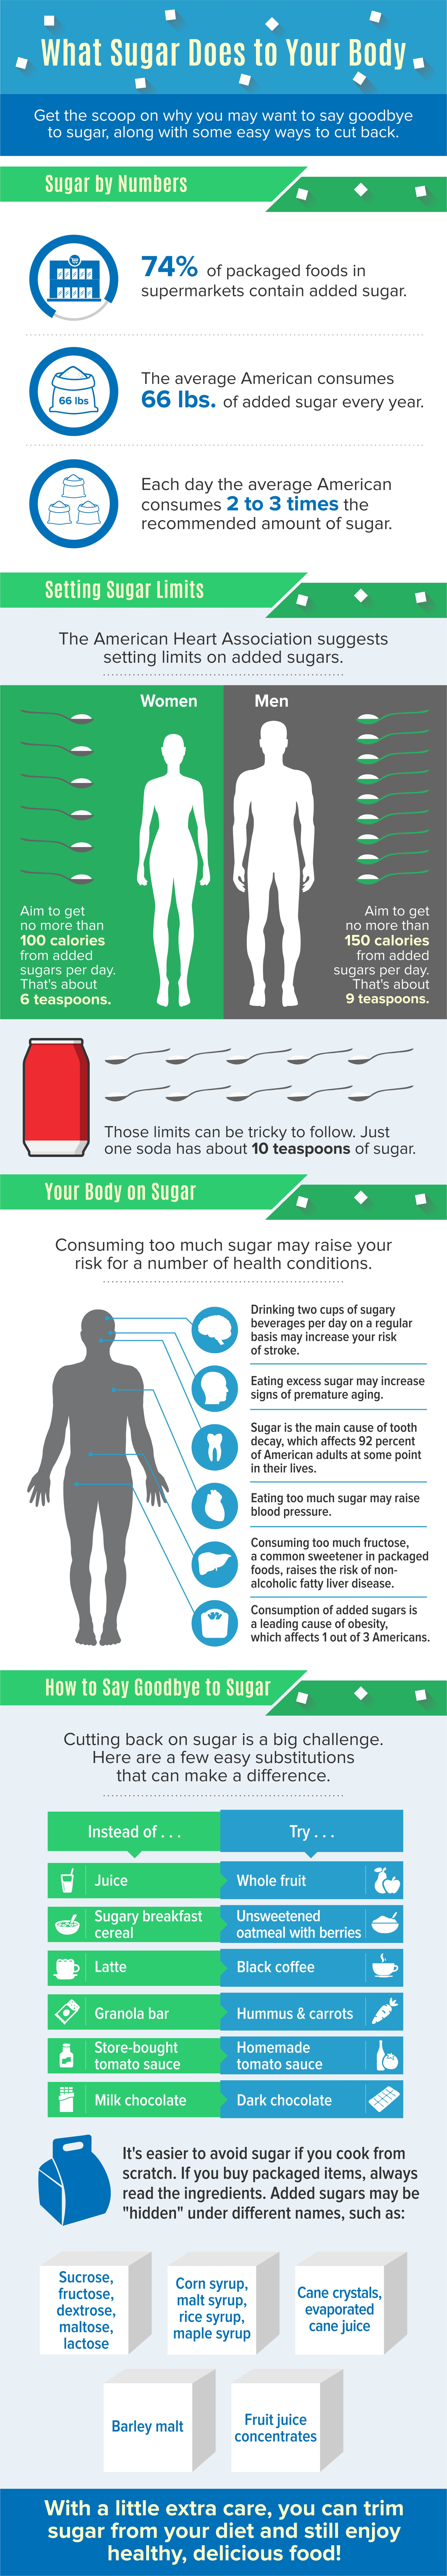 Sugar infographic